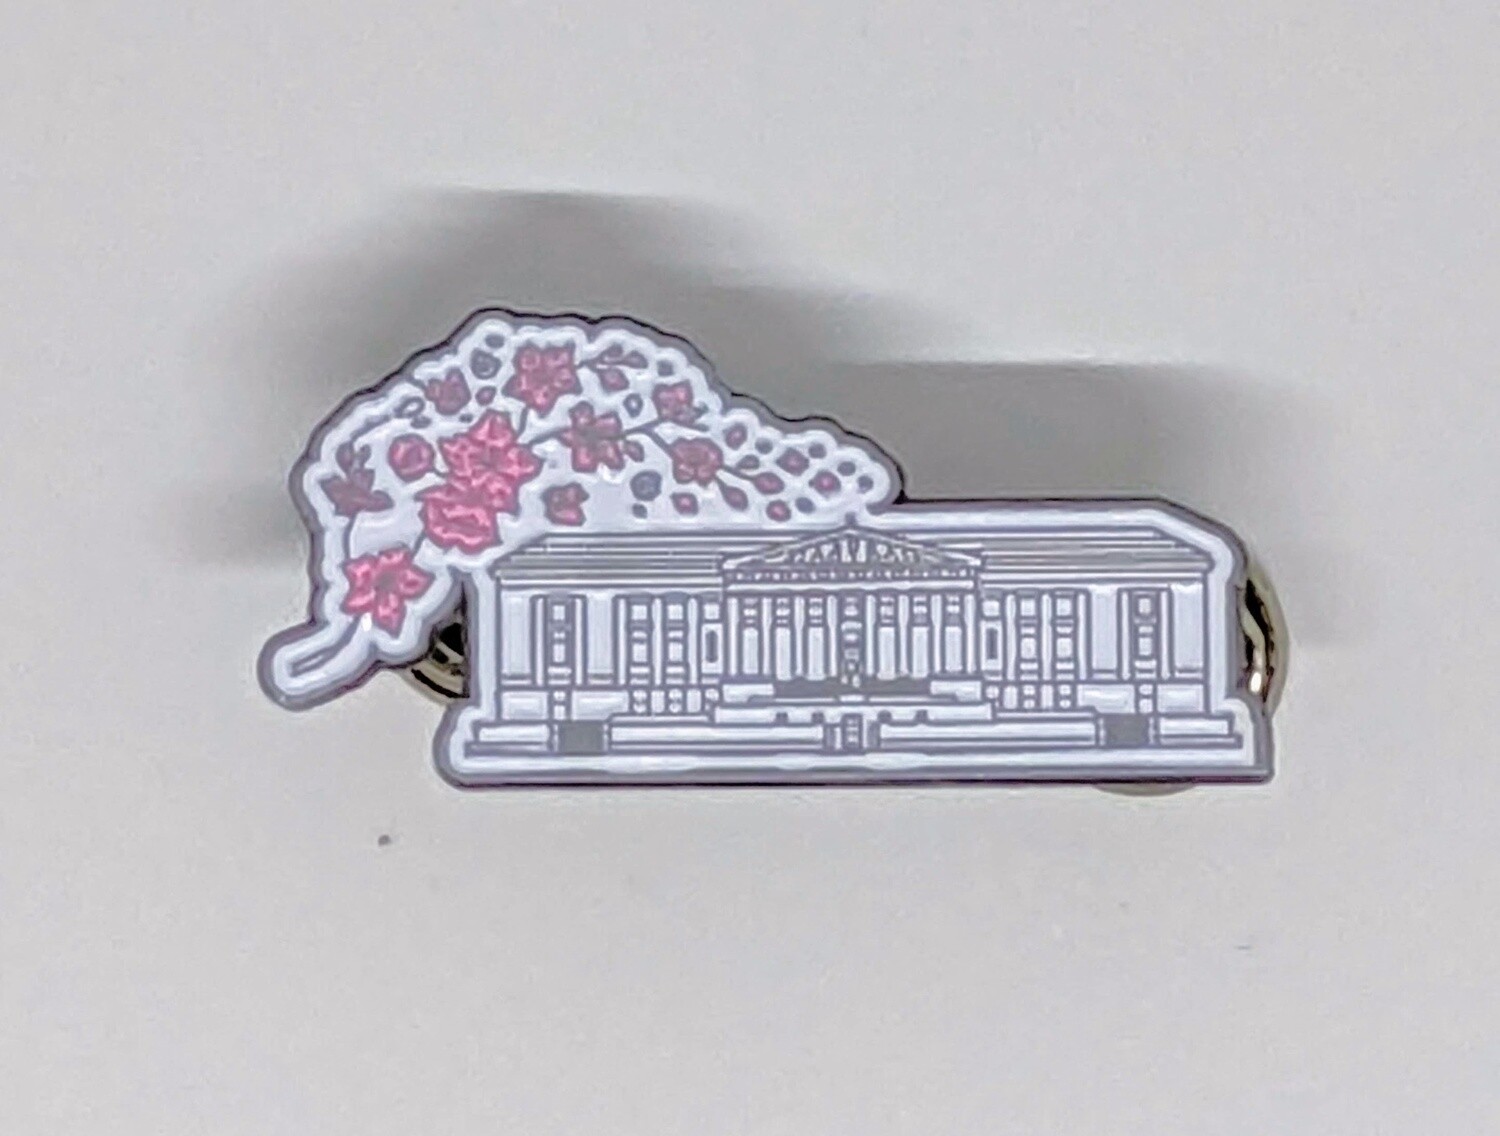 Museum Cherry Blossom Pin